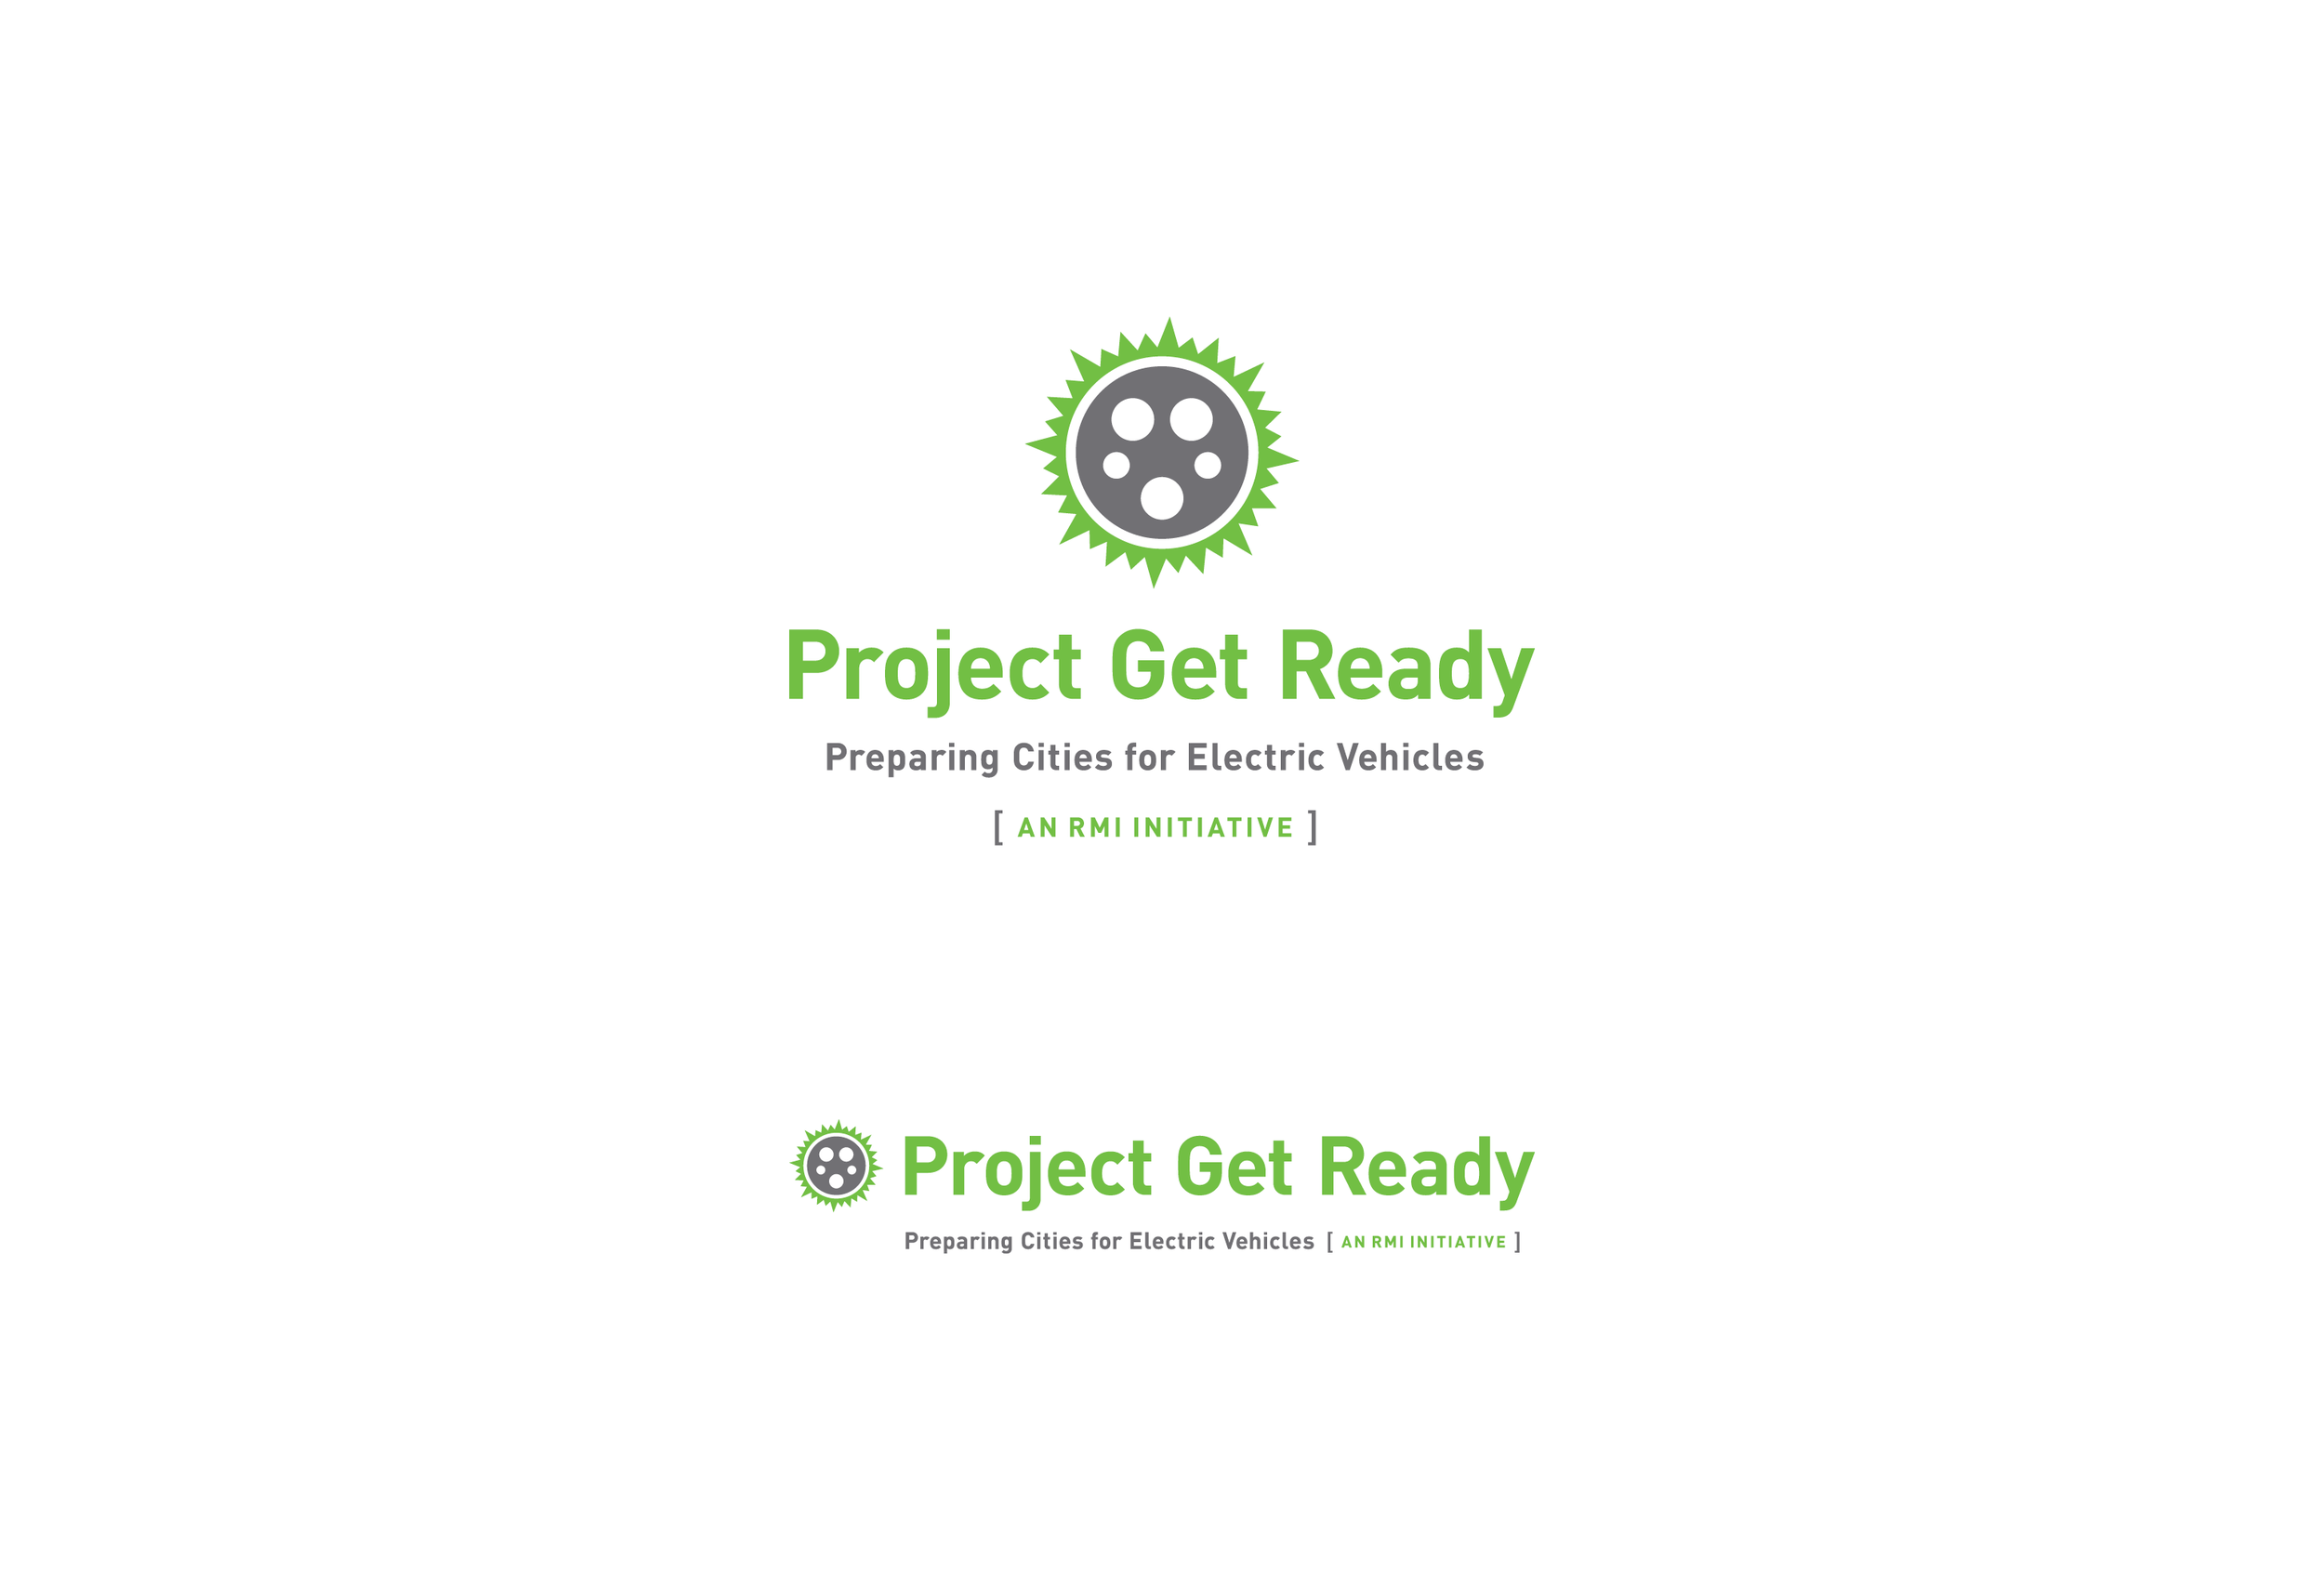 Final Project Get Ready logo.